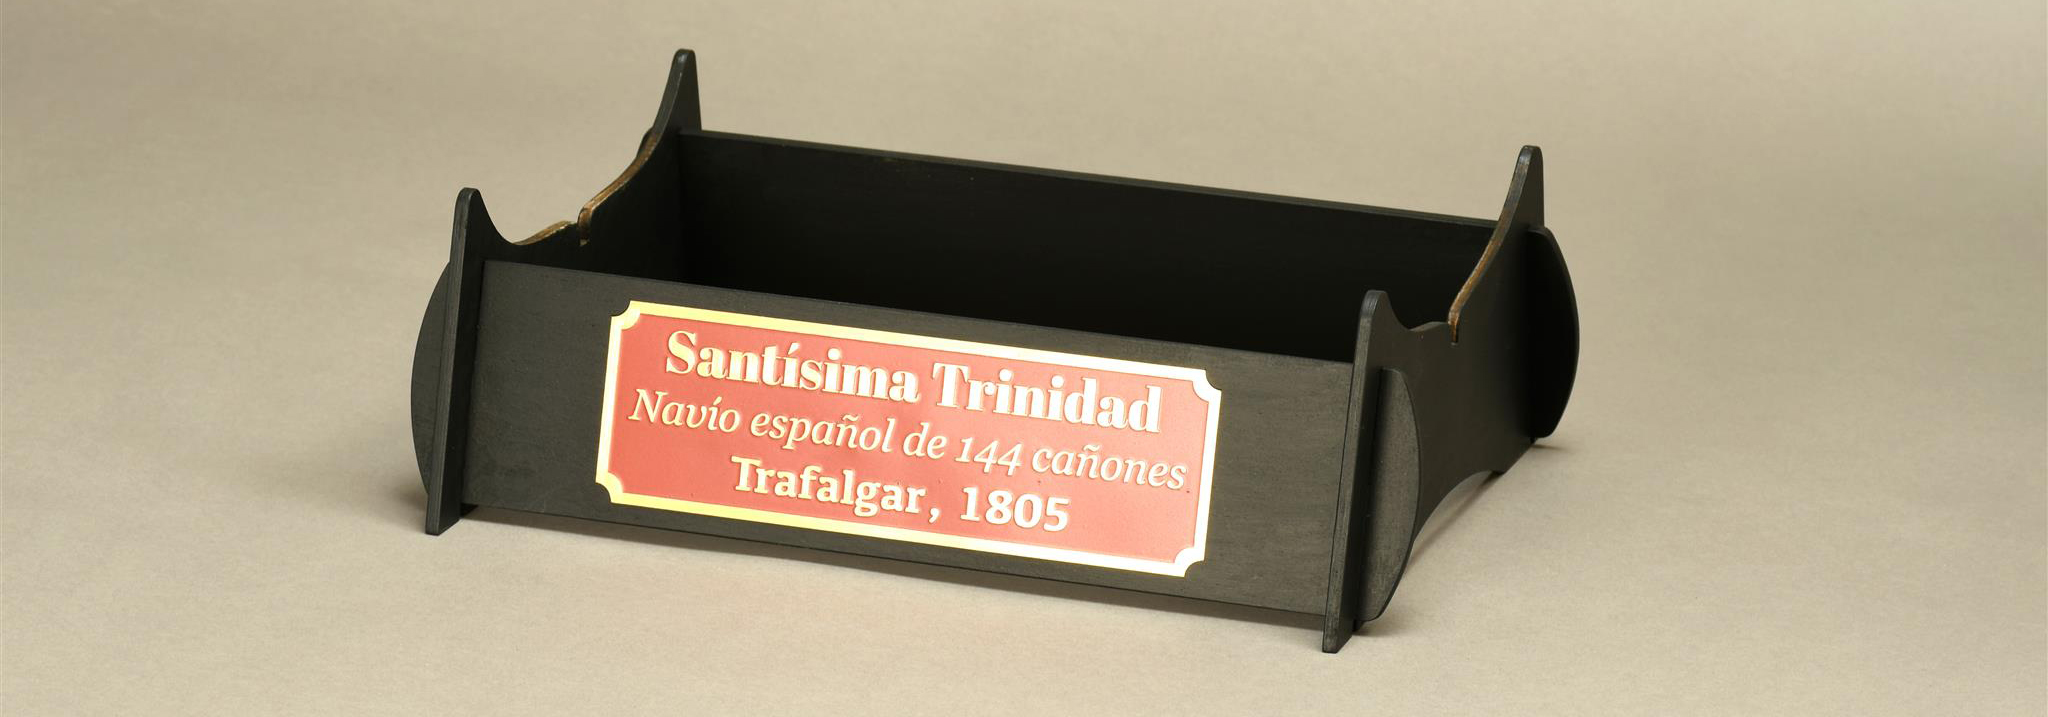 Exhibition Base for Model Ship Santisima Trinidad in Wood Trafalgar 1805 Edition at 1:84 Scale (22901) by Artesanía Latina.